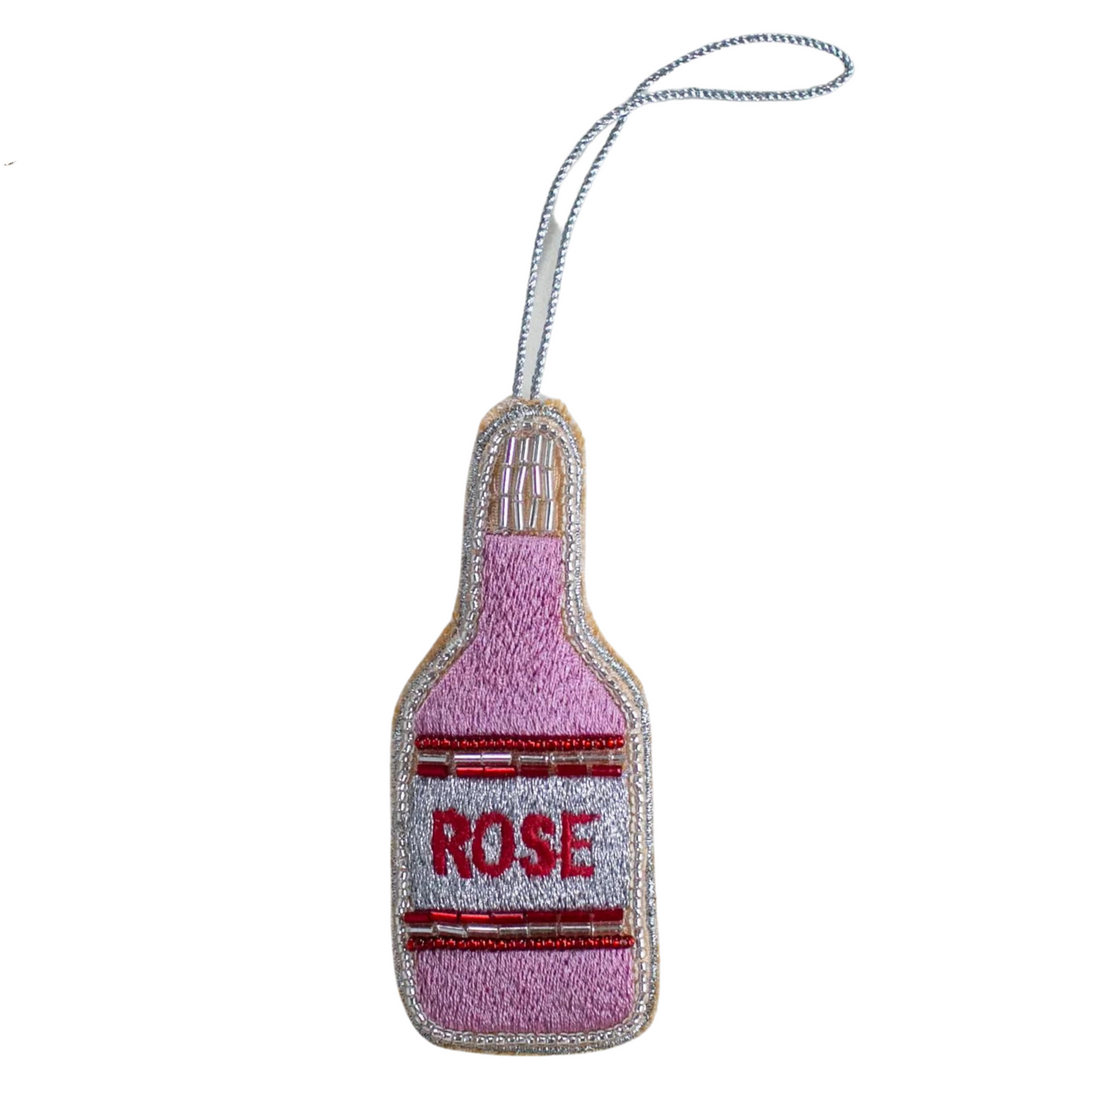 Handmade ornament of Rose bottle by Skippy Cotton